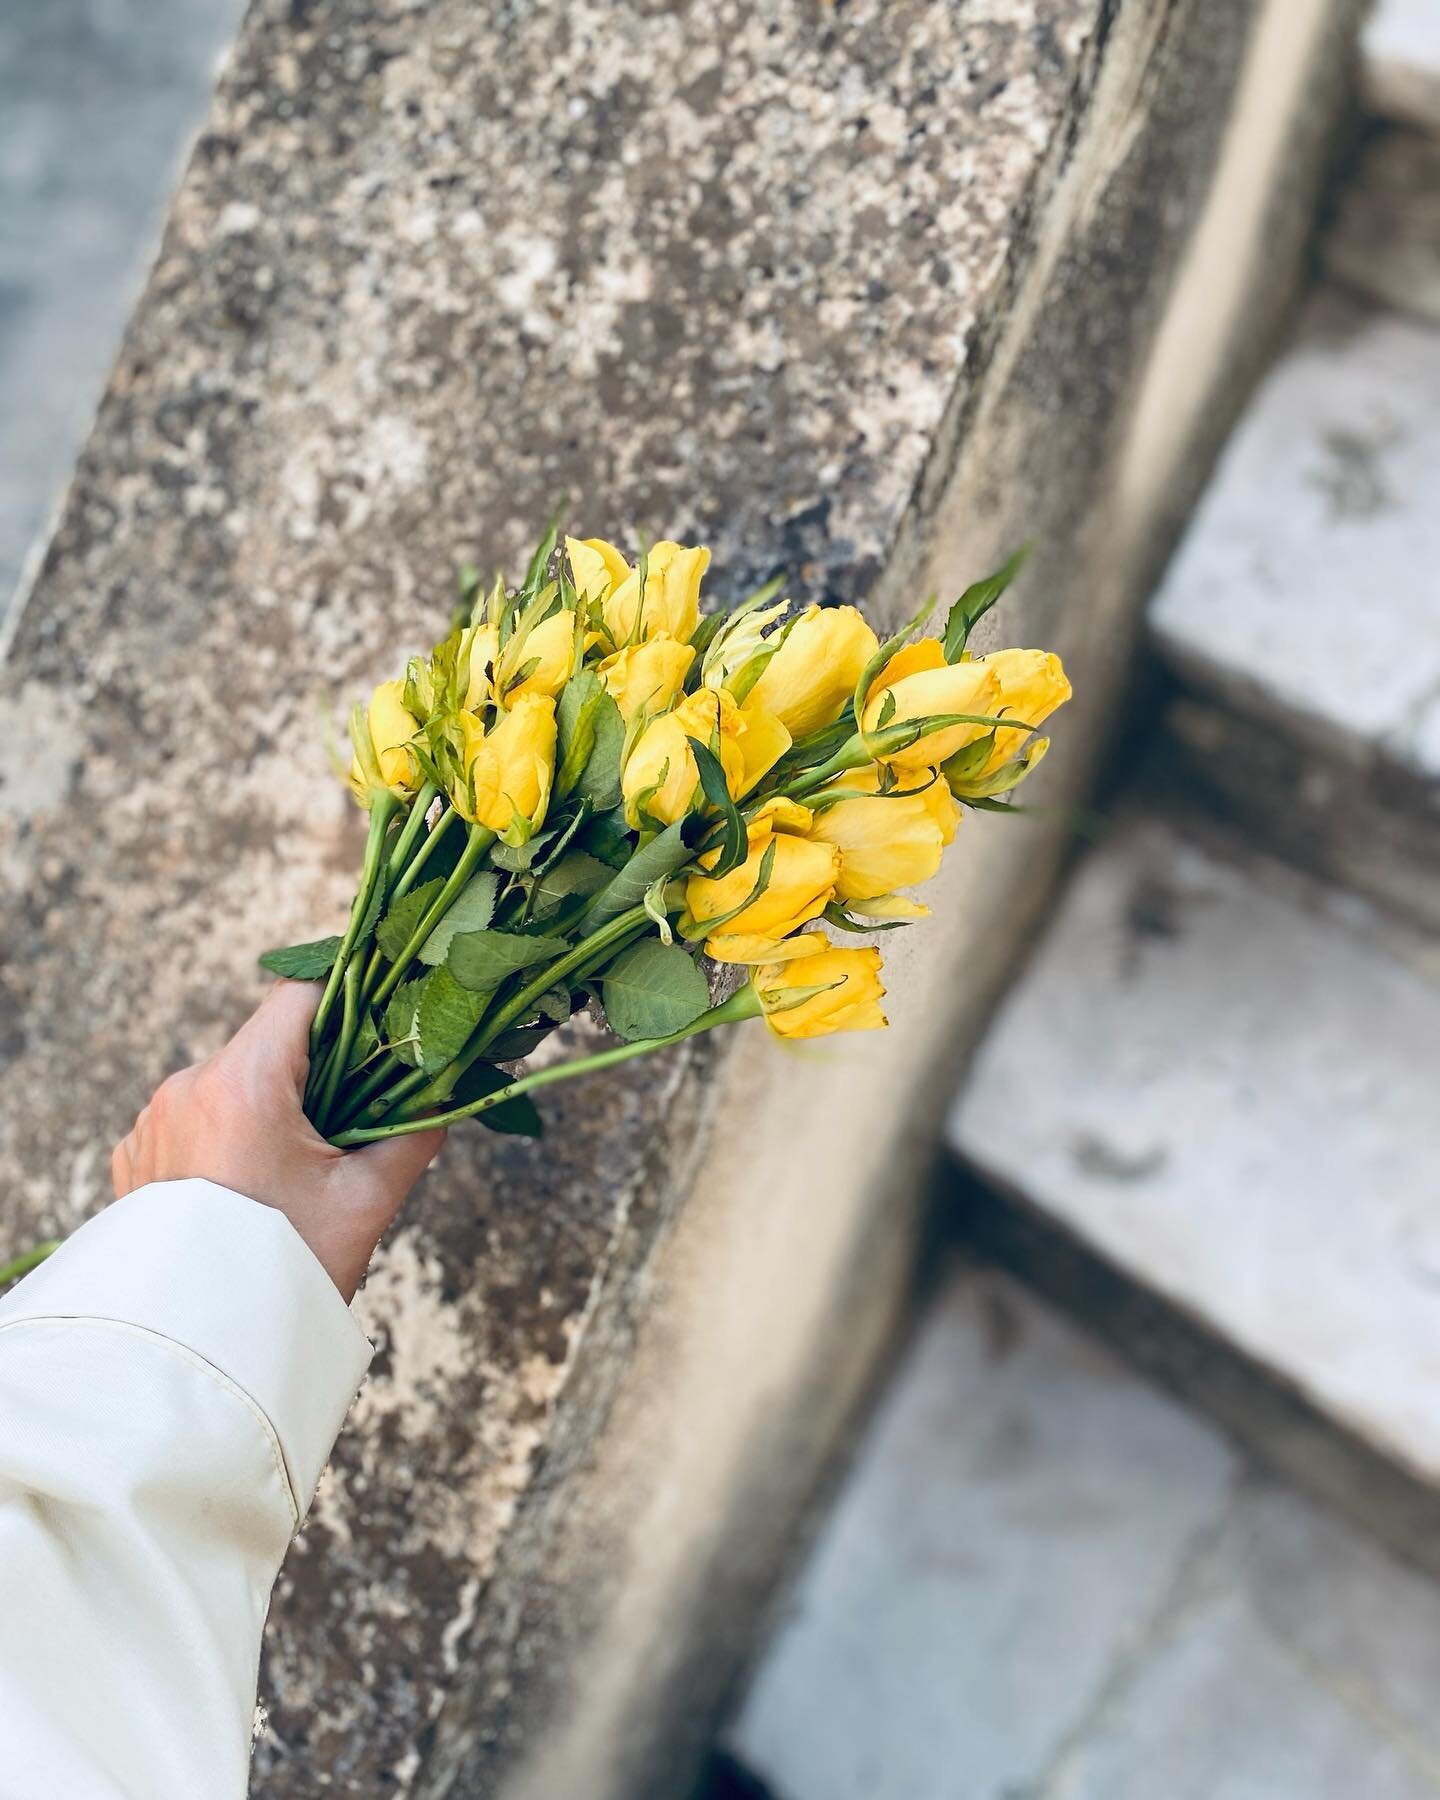 A little gift 🌷
 #jaune #couleurjaune #yellow #wearyellow #yellowday #yellowstyle #couleurjaune #vetementjaune #yellowlover #flower #flowers #bouquet #floweryday #floral #dailyflower #fleurdujour #fleursdujour #flowerlover #passionfleur #vetementsjo